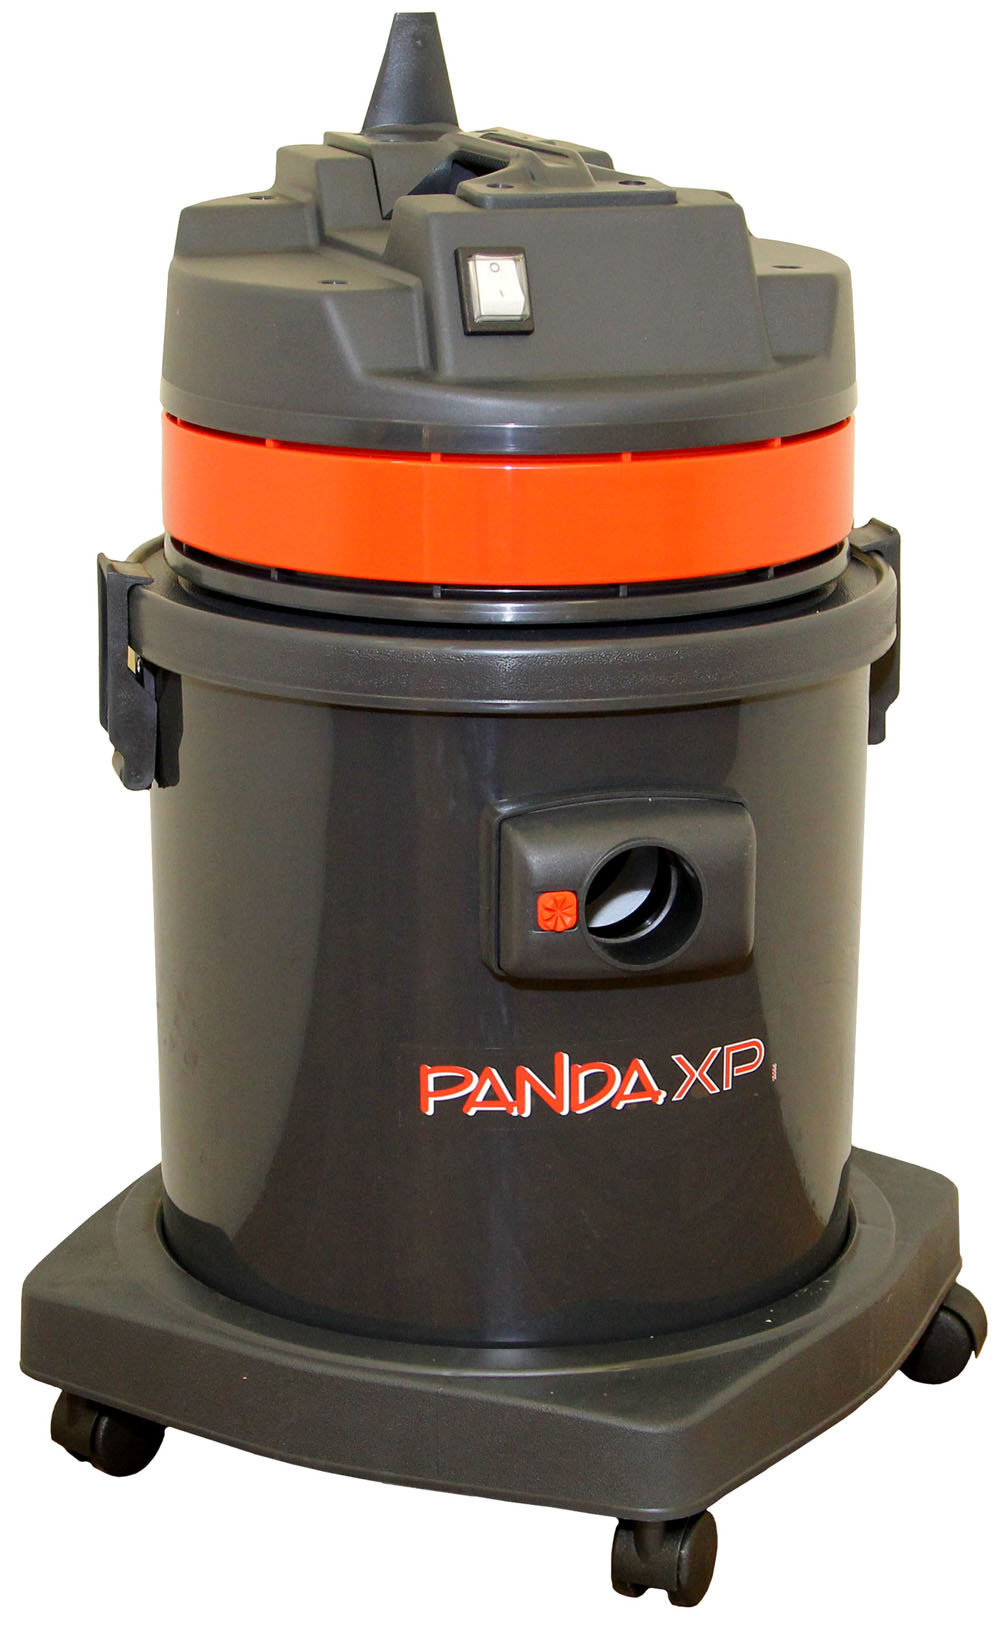 PANDA 515 XP PLAST